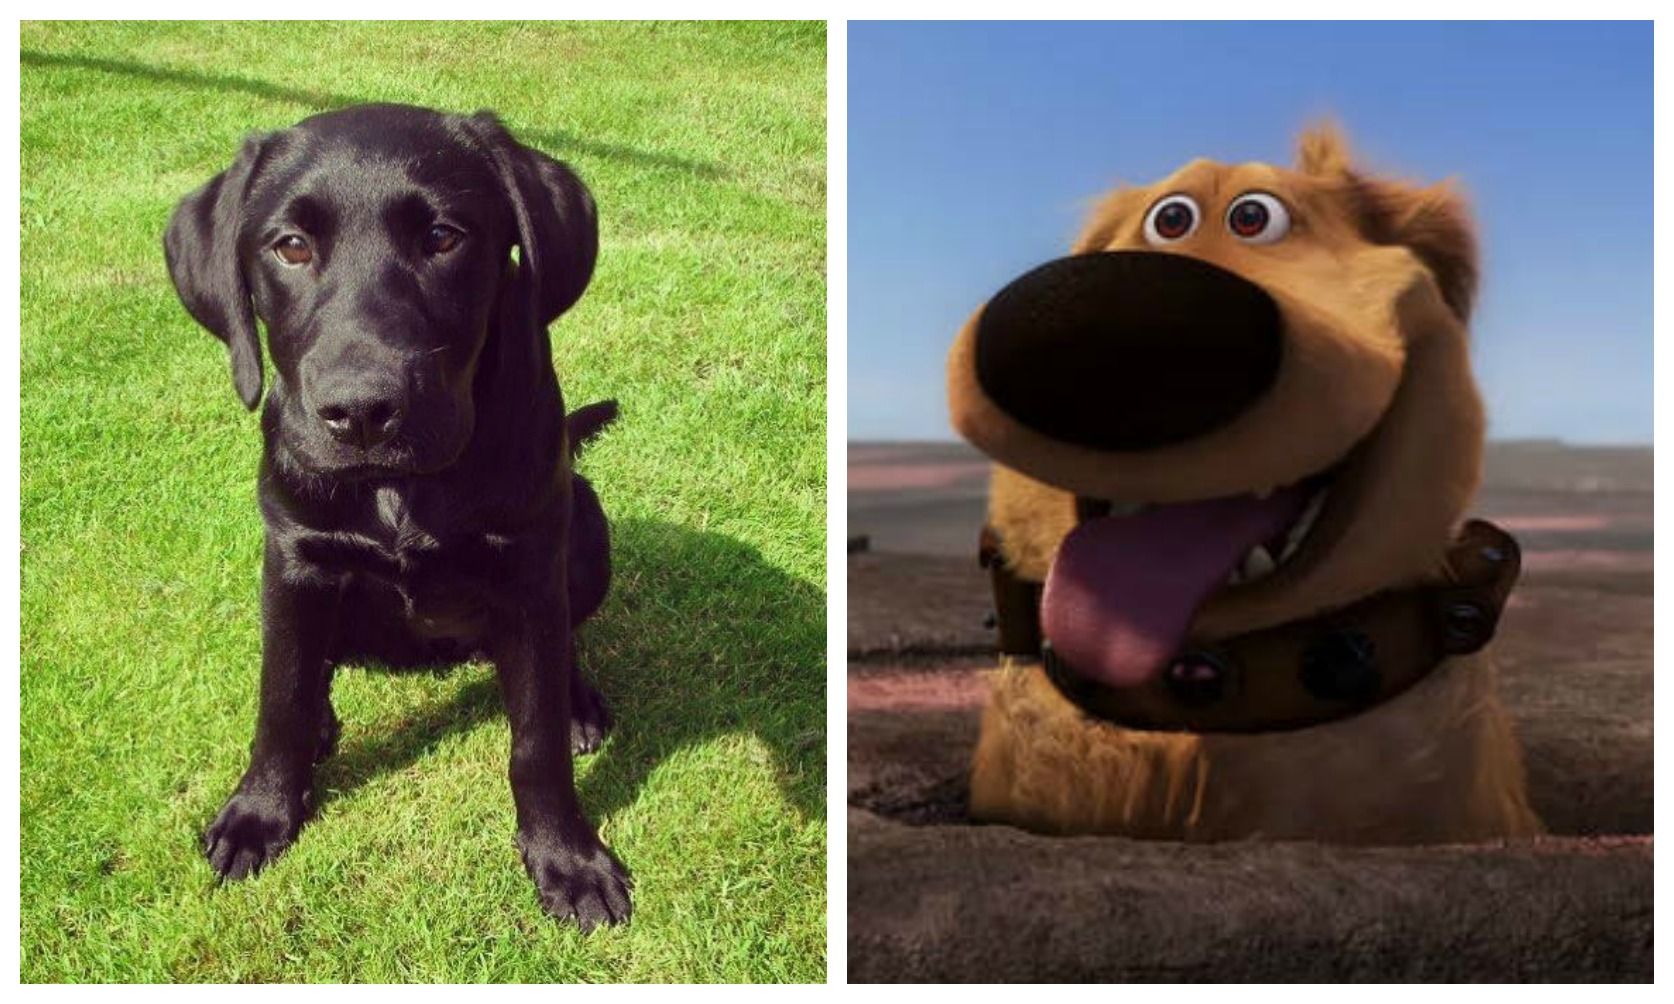 automat udslæt Detektiv You can now use Snapchat to make your dog look like Dug from Disney Pixar's  Up - JOE.co.uk